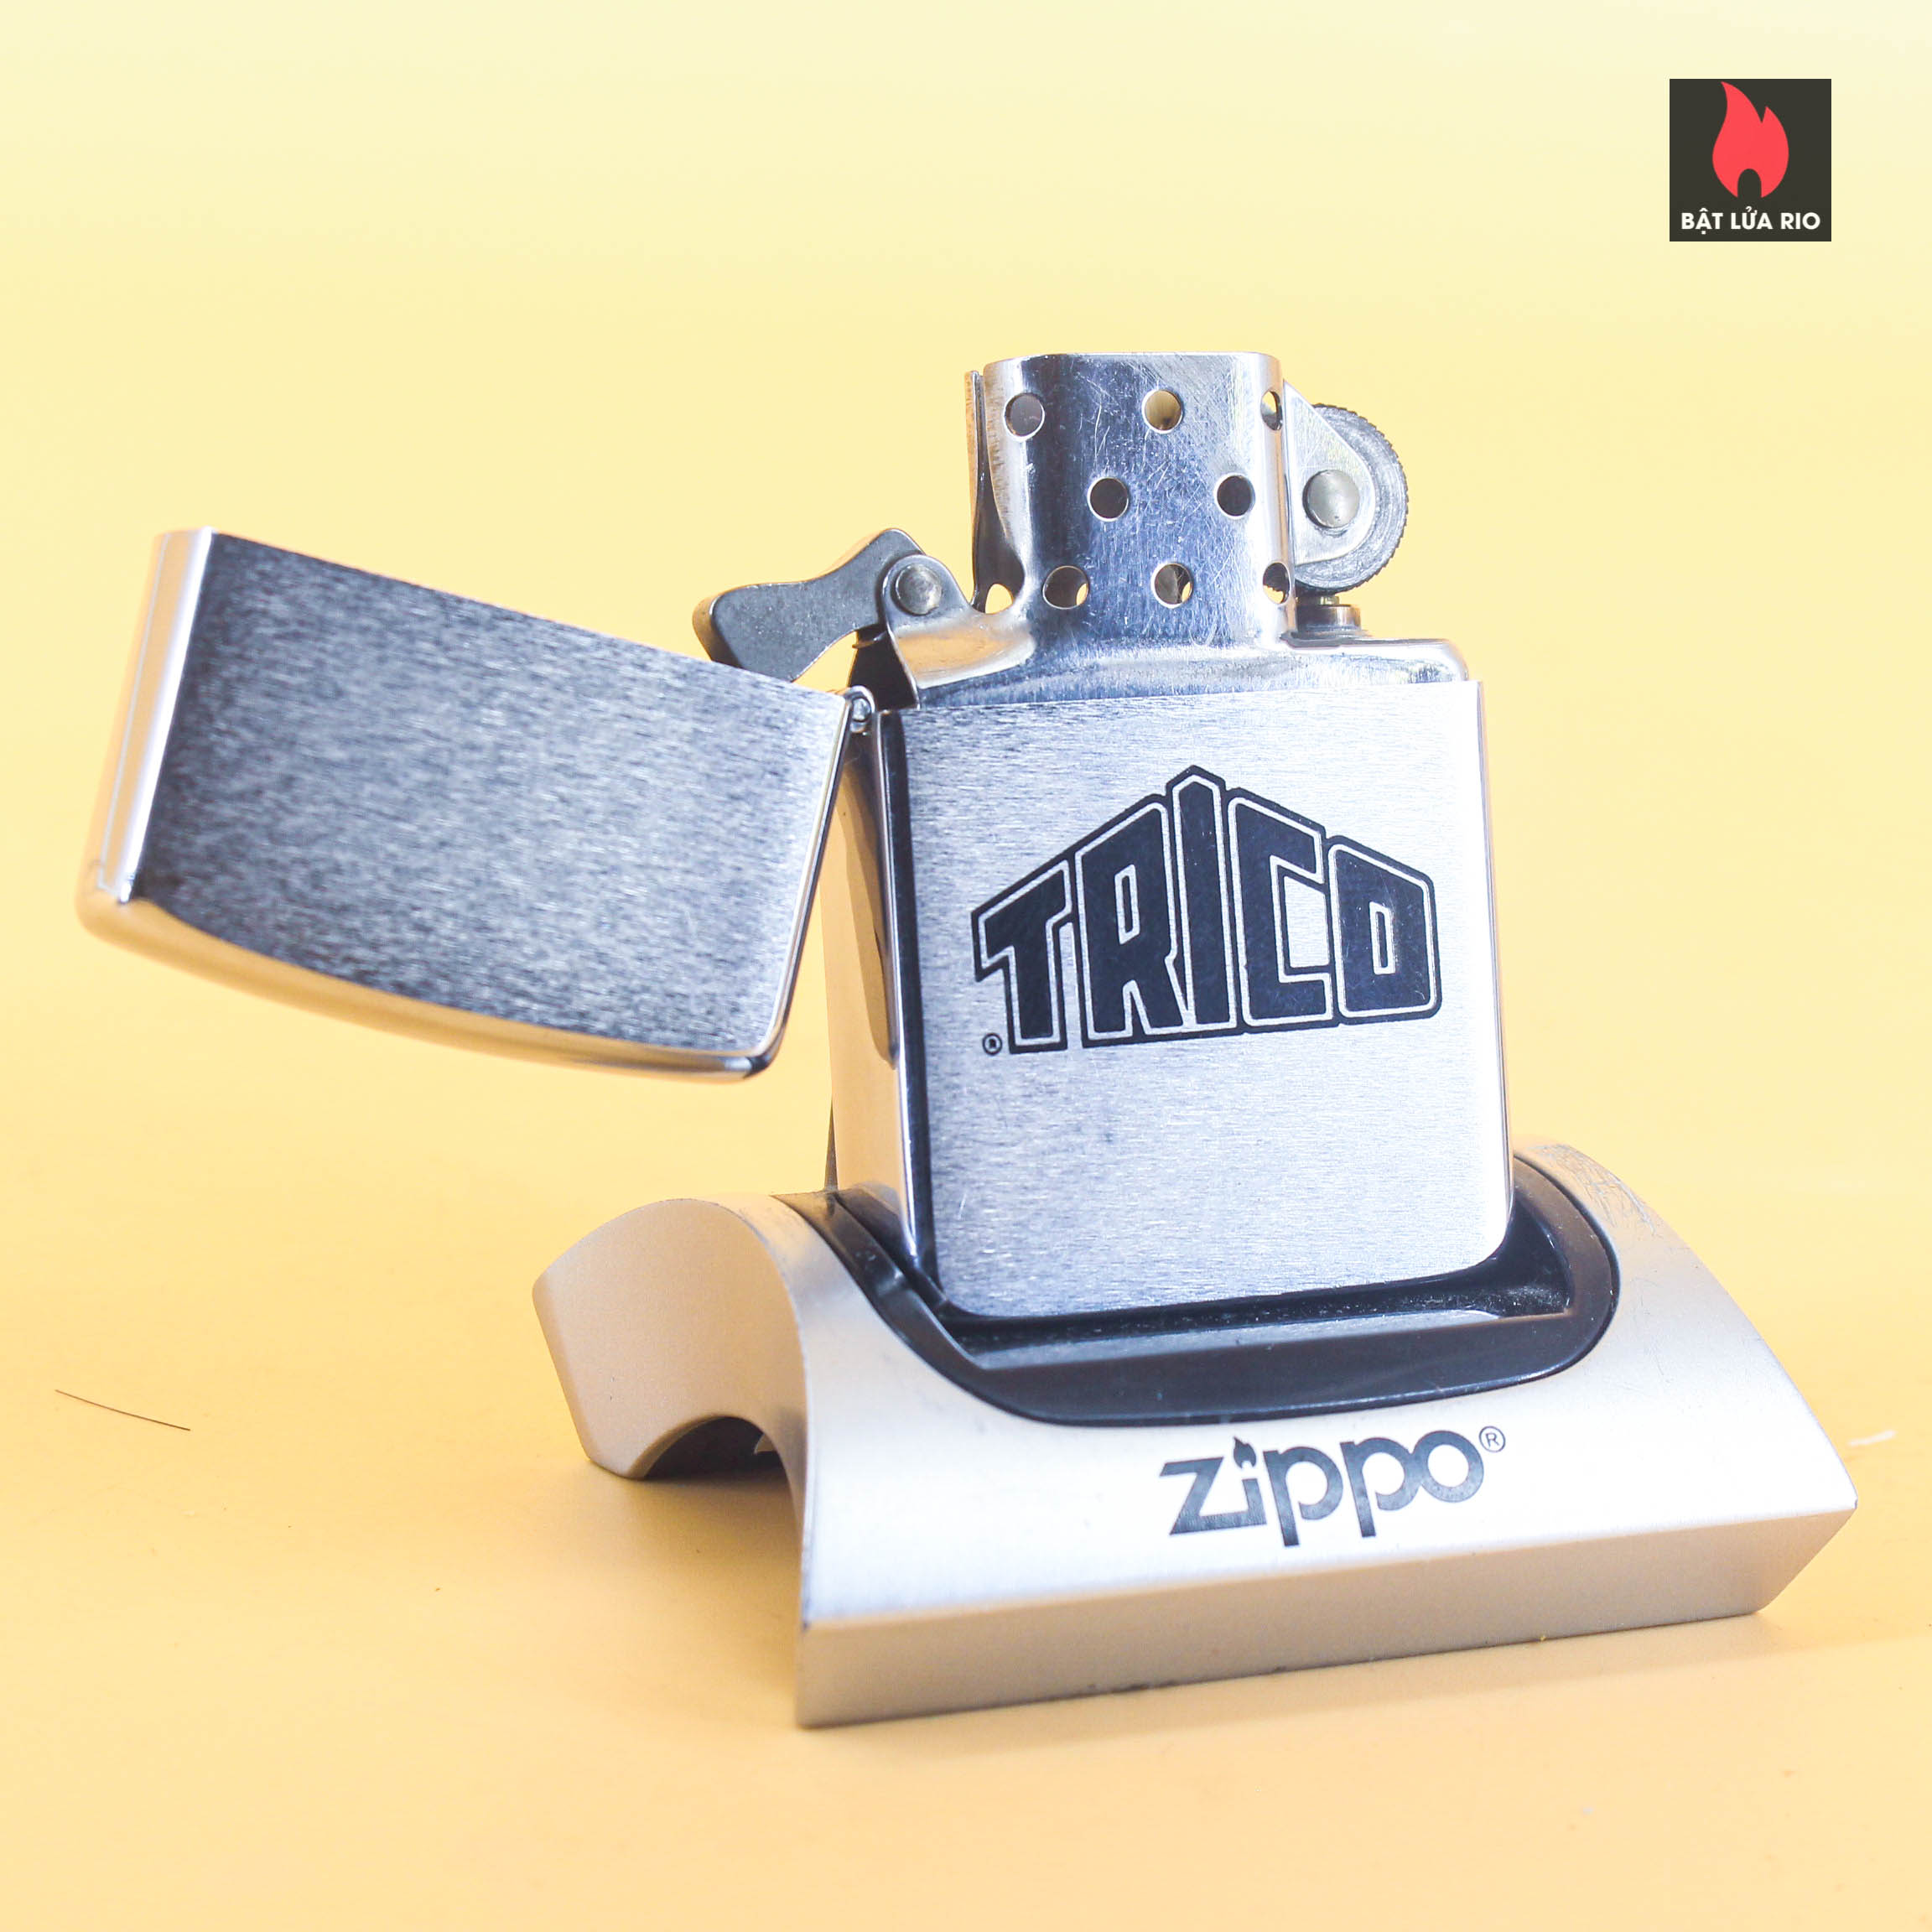 Zippo La Mã 1986 – Trico 1